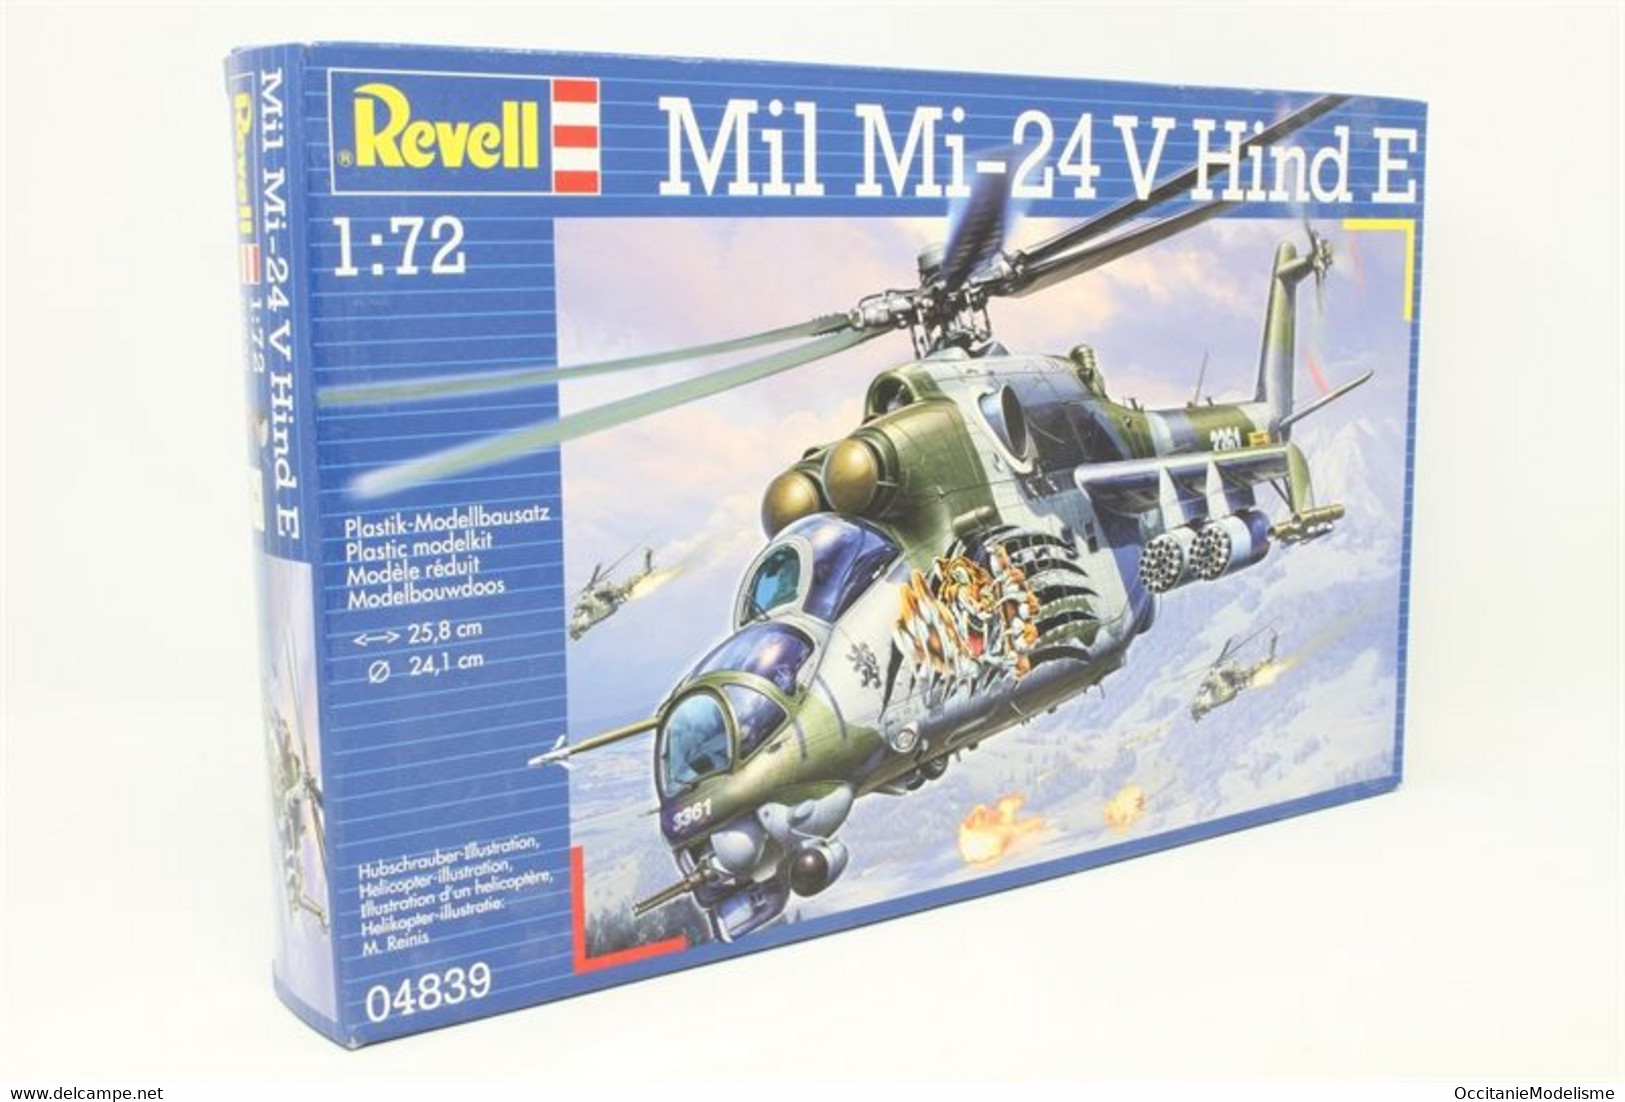 Revell - MIL Mi-24 V Hind E Maquette Hélicoptère Kit Plastique Réf. 04839 Neuf NBO 1/72 - Hubschrauber